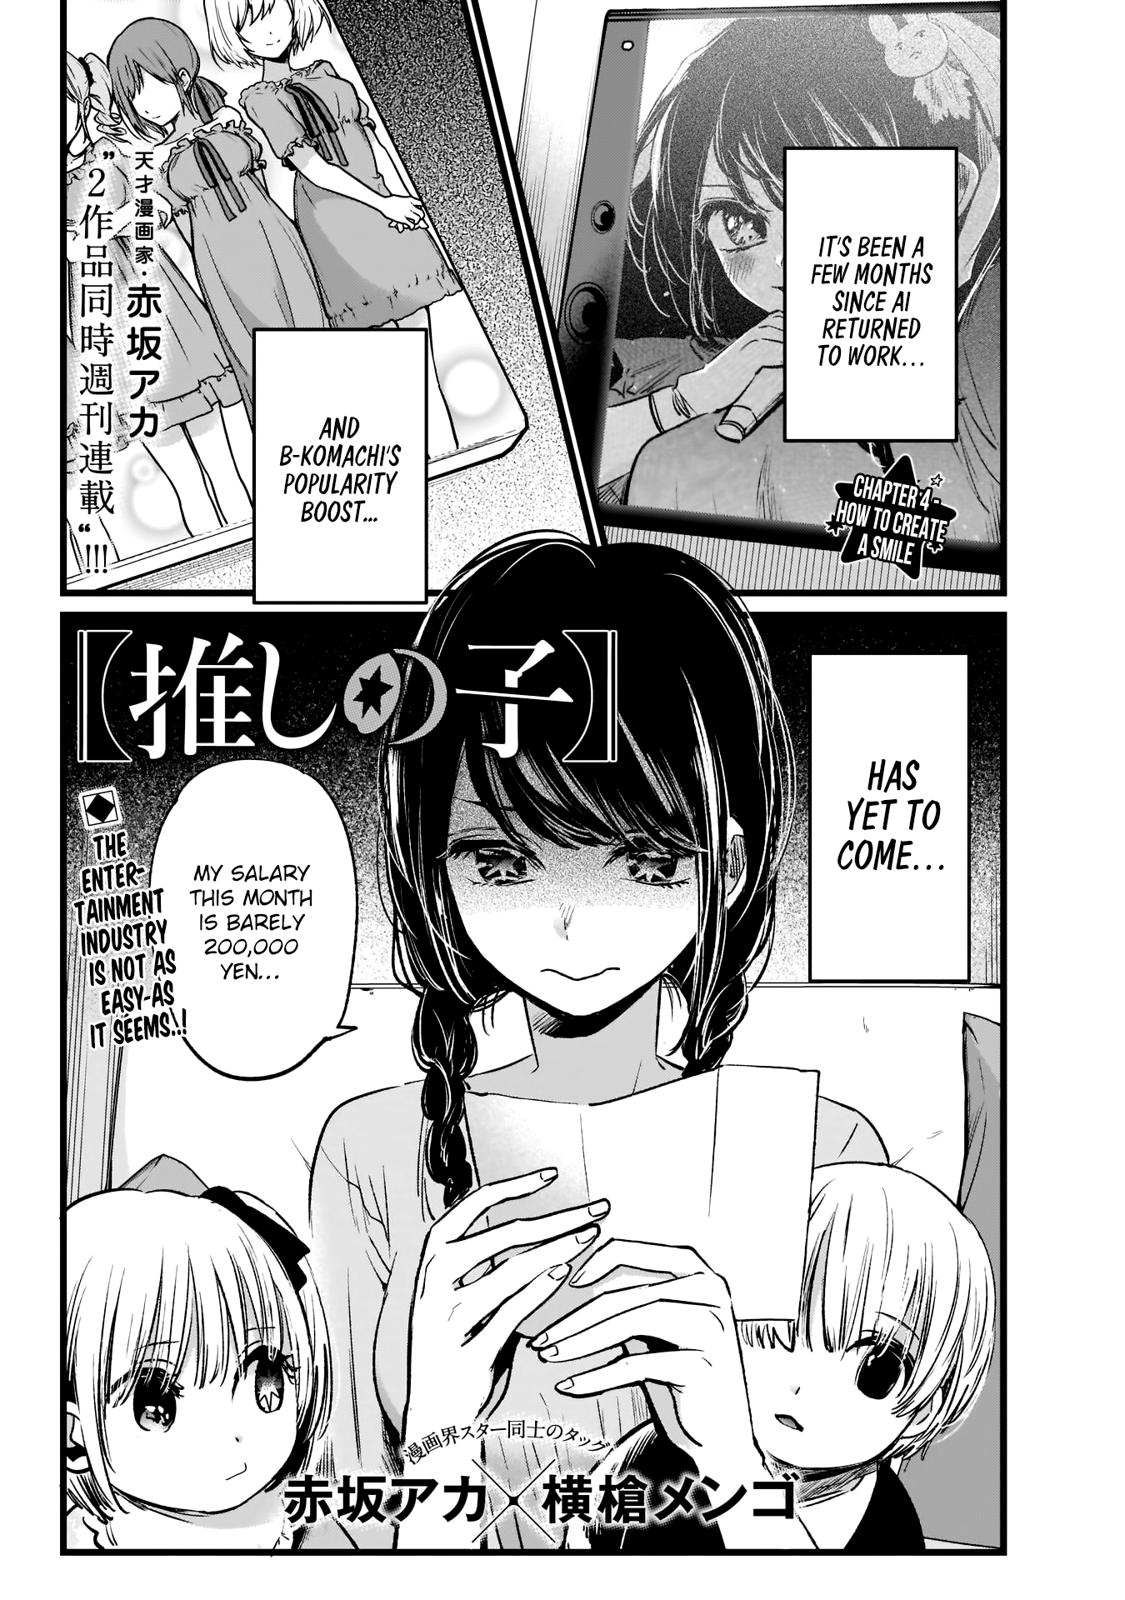 Oshi No Ko Manga Manga Chapter - 4 - image 2